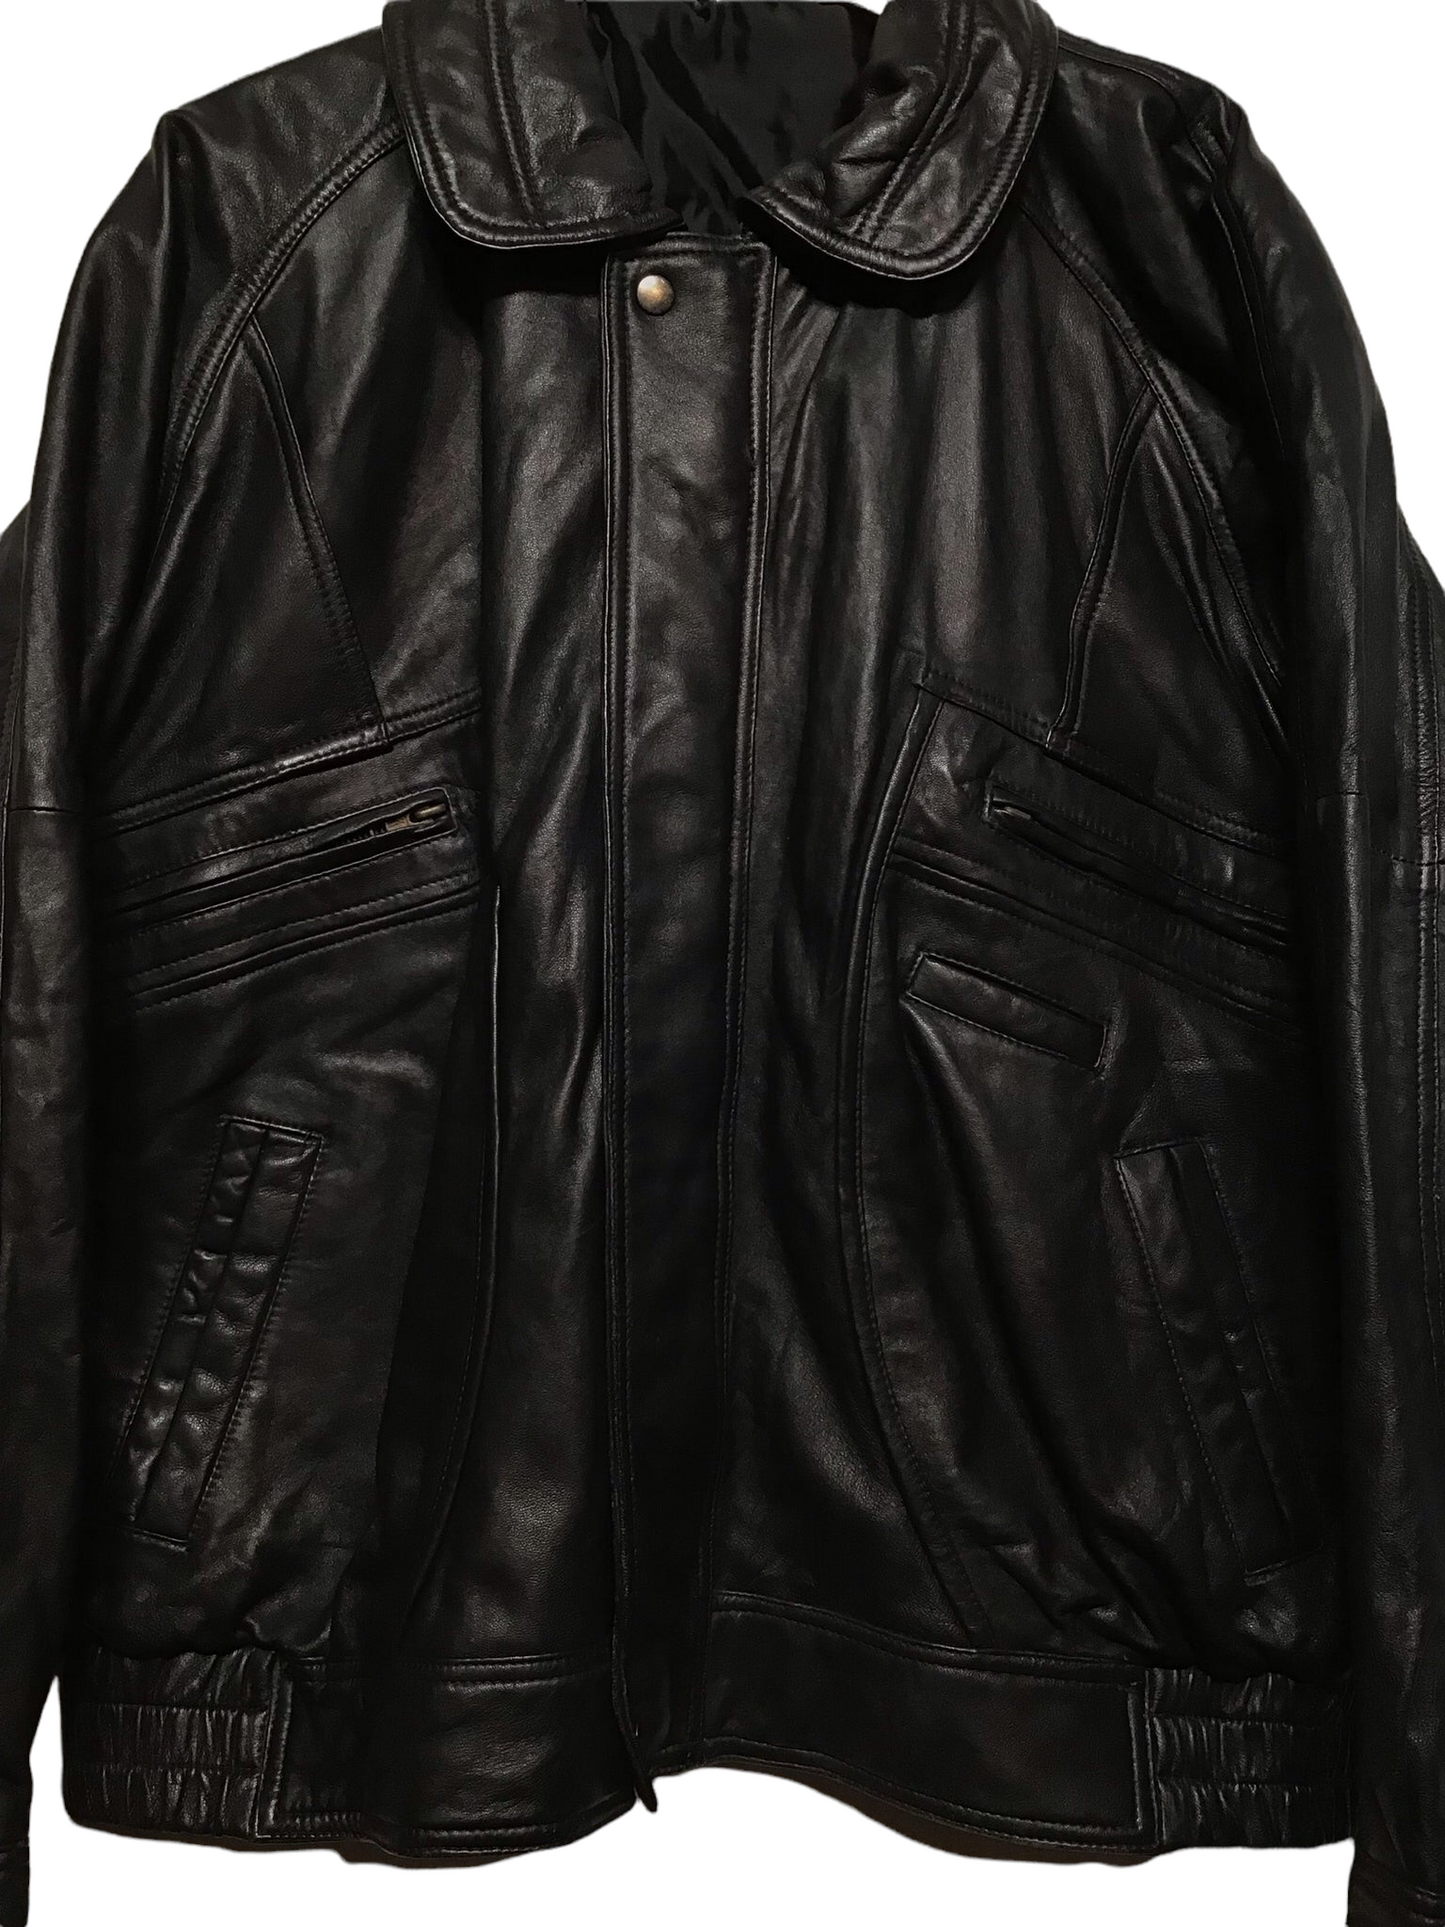 Black Leather Jacket (Size L)